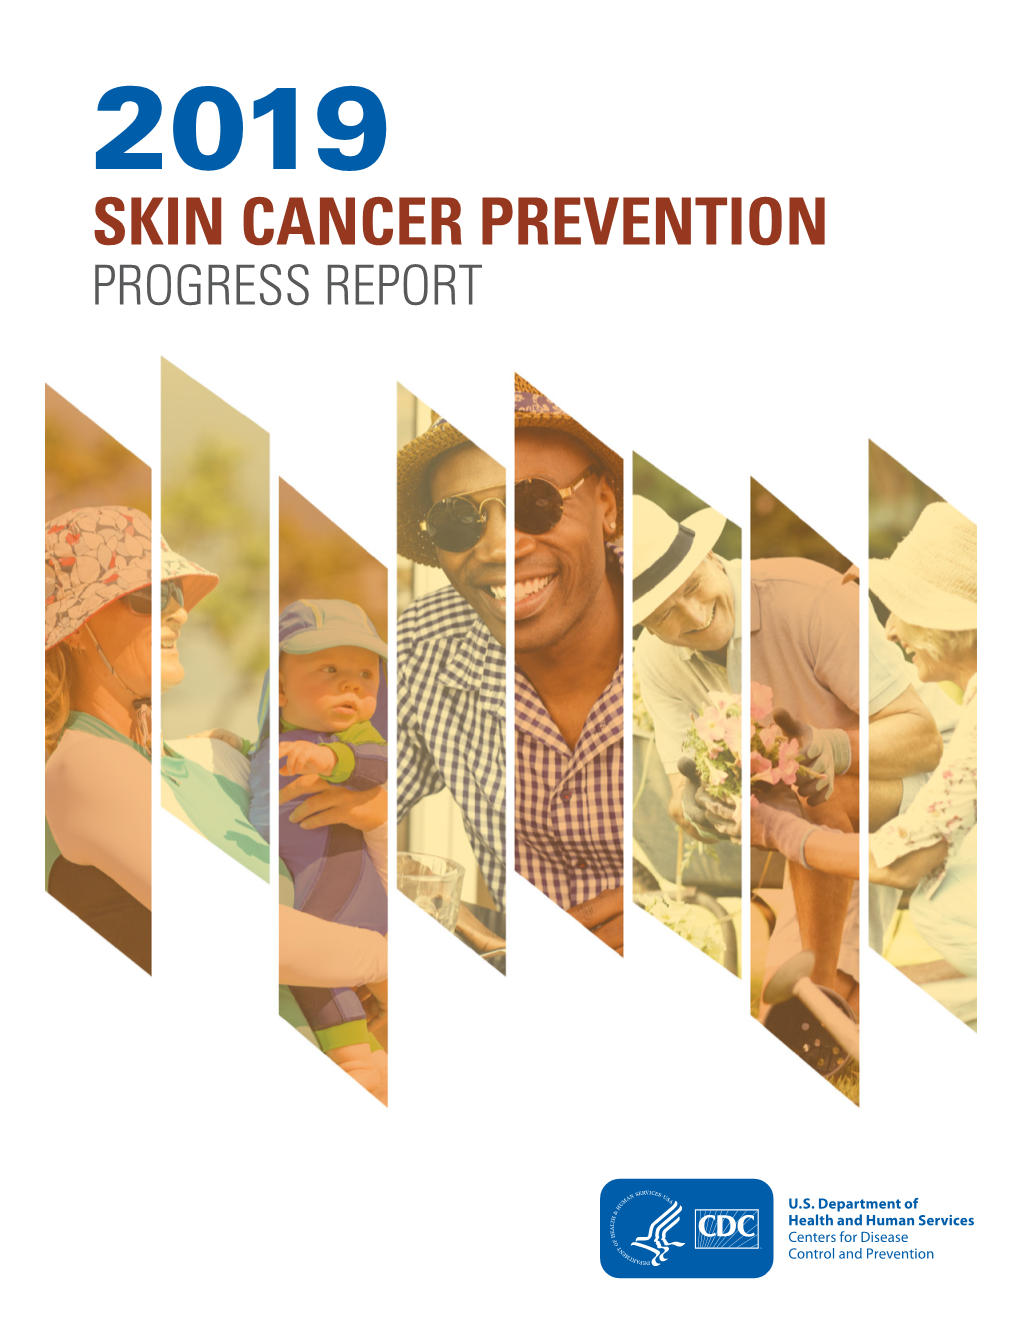 2019 Skin Cancer Prevention Progress Report Contents